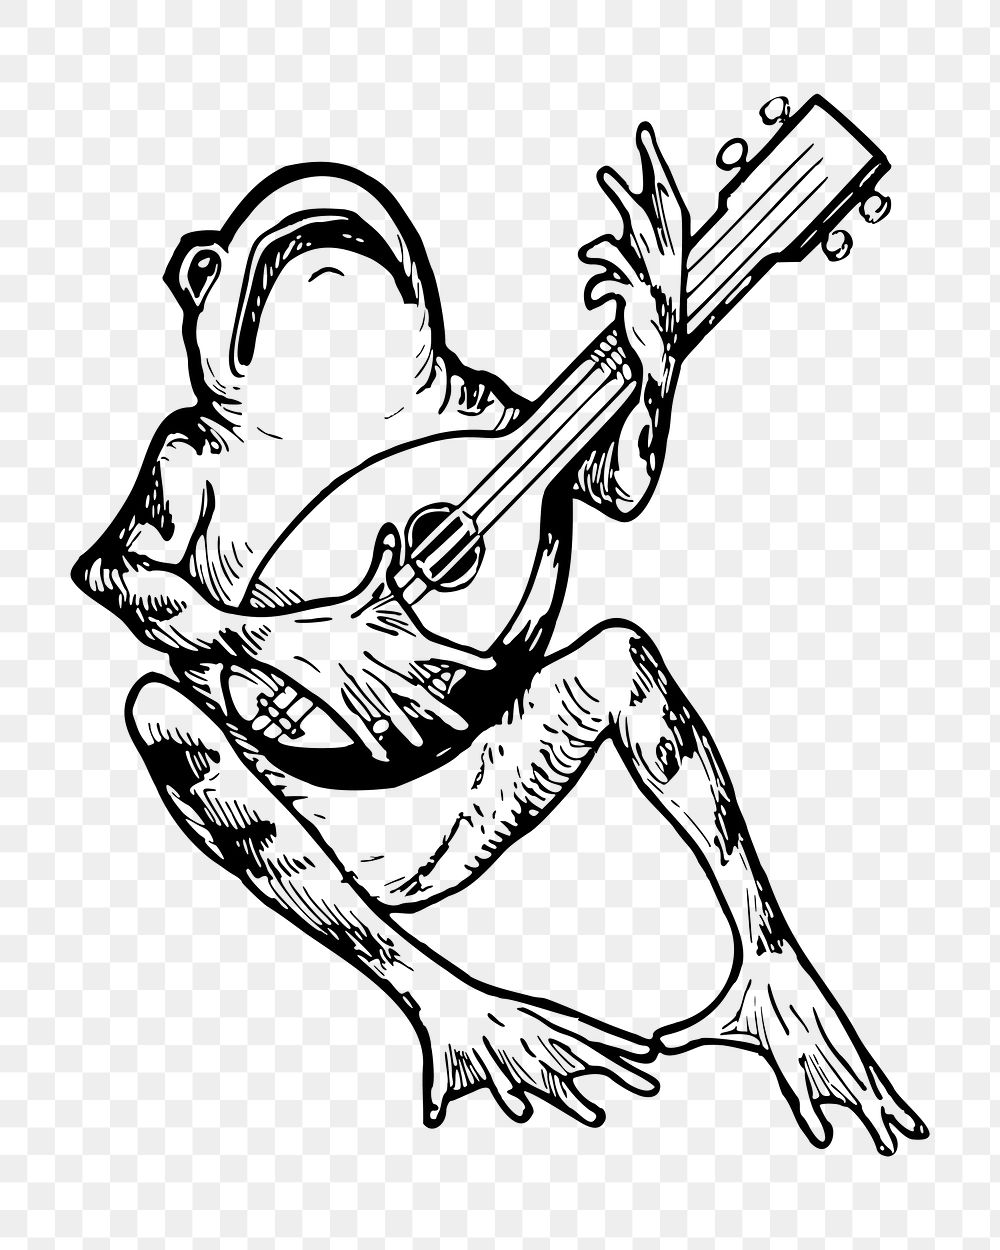 PNG Musician frog clipart, transparent background. Free public domain CC0 image.